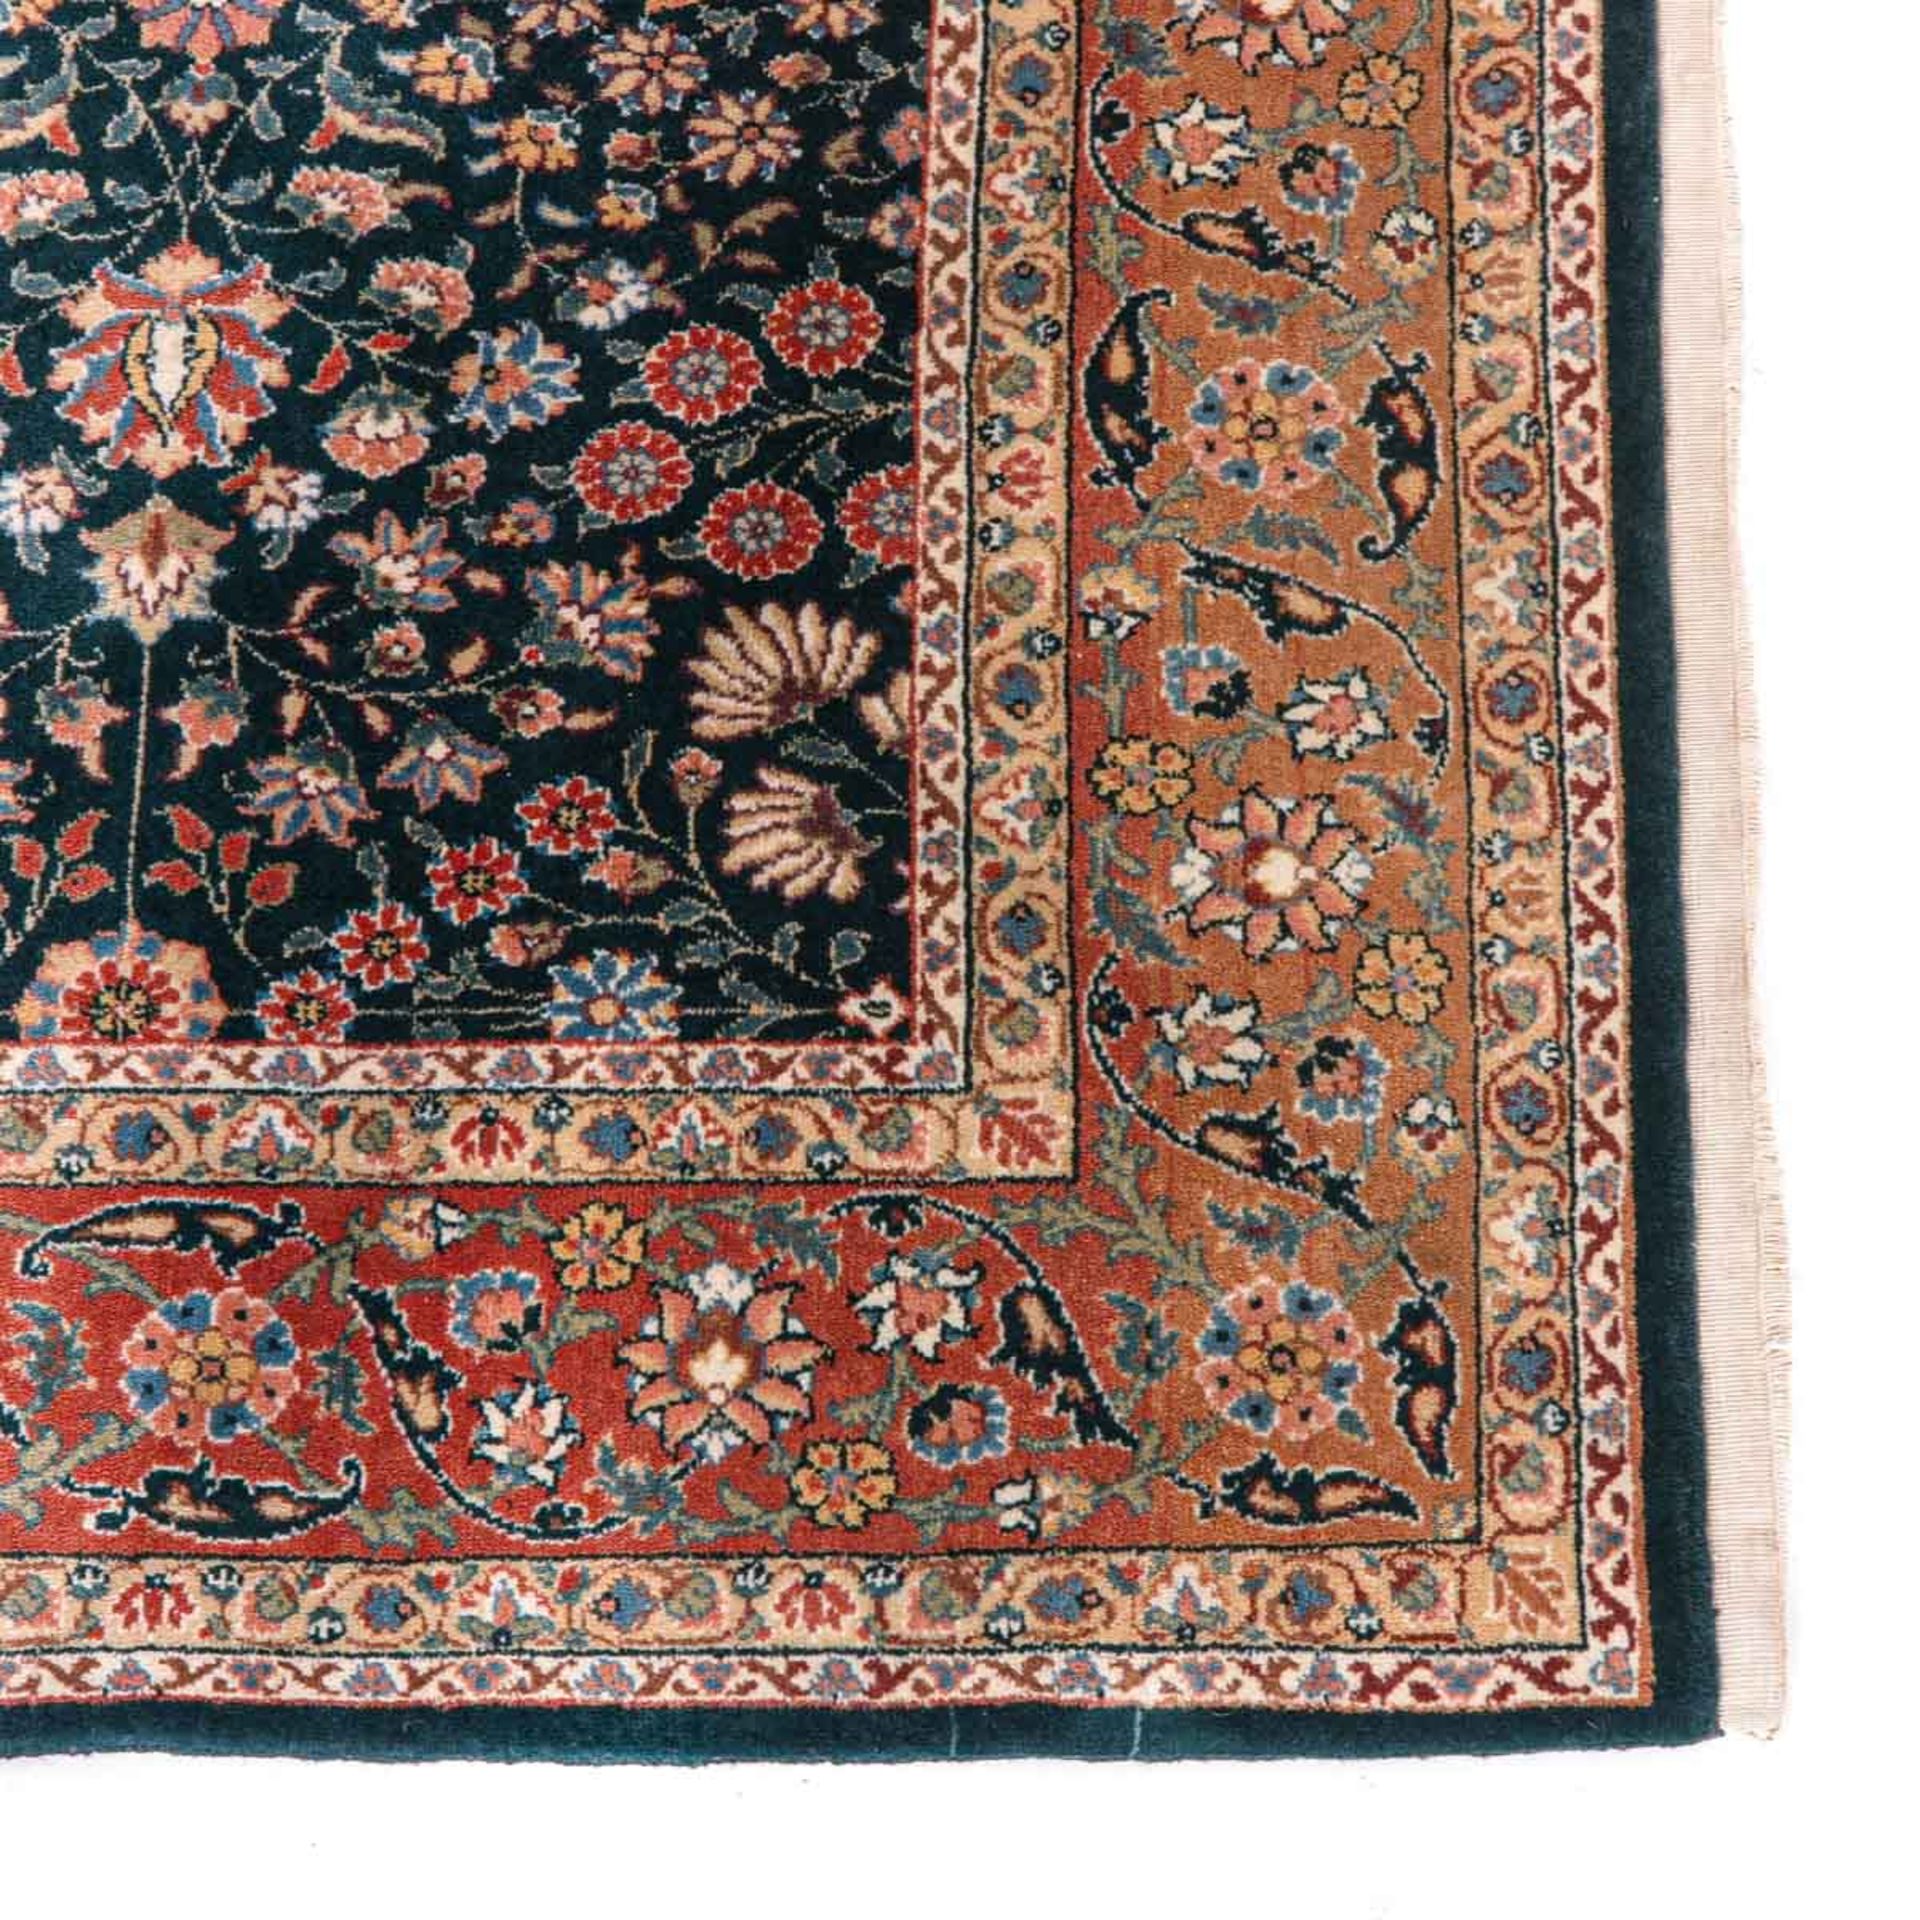 A Wool Carpet - Image 5 of 5